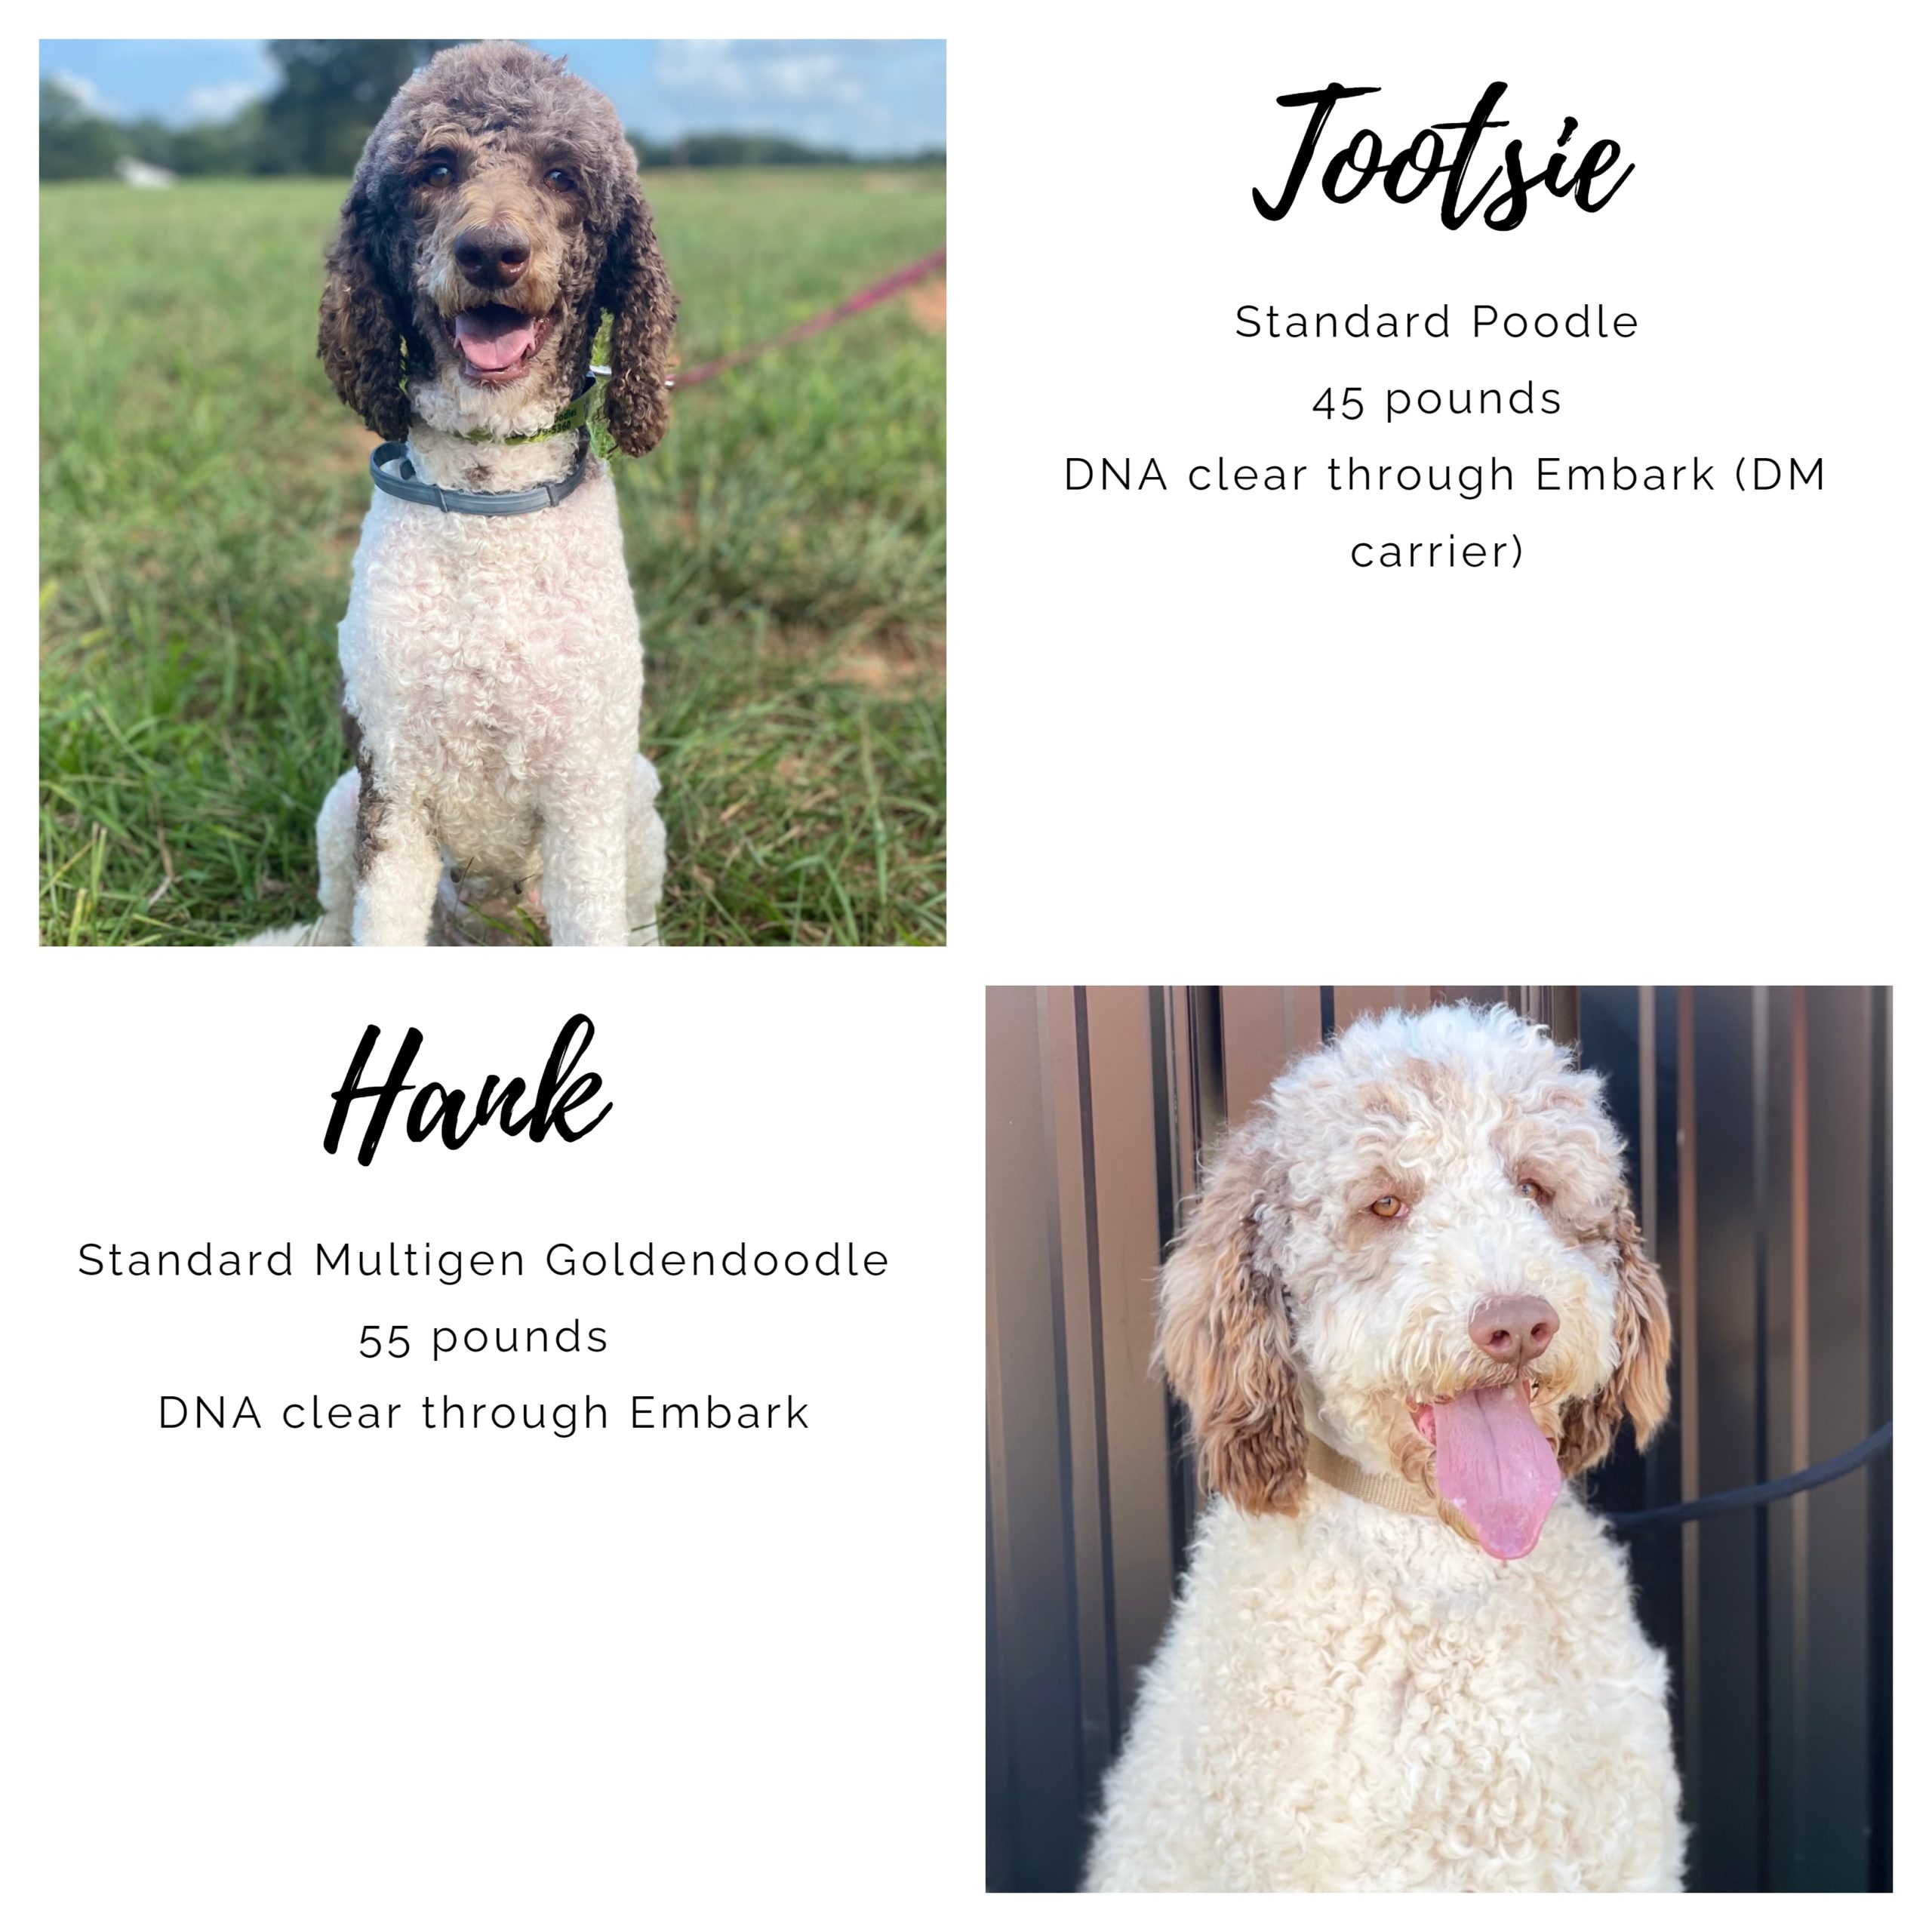 Puppies, Standard Poodle (Tootsie), Standard Multigen Goldendoodle (Hank), ready to adopt